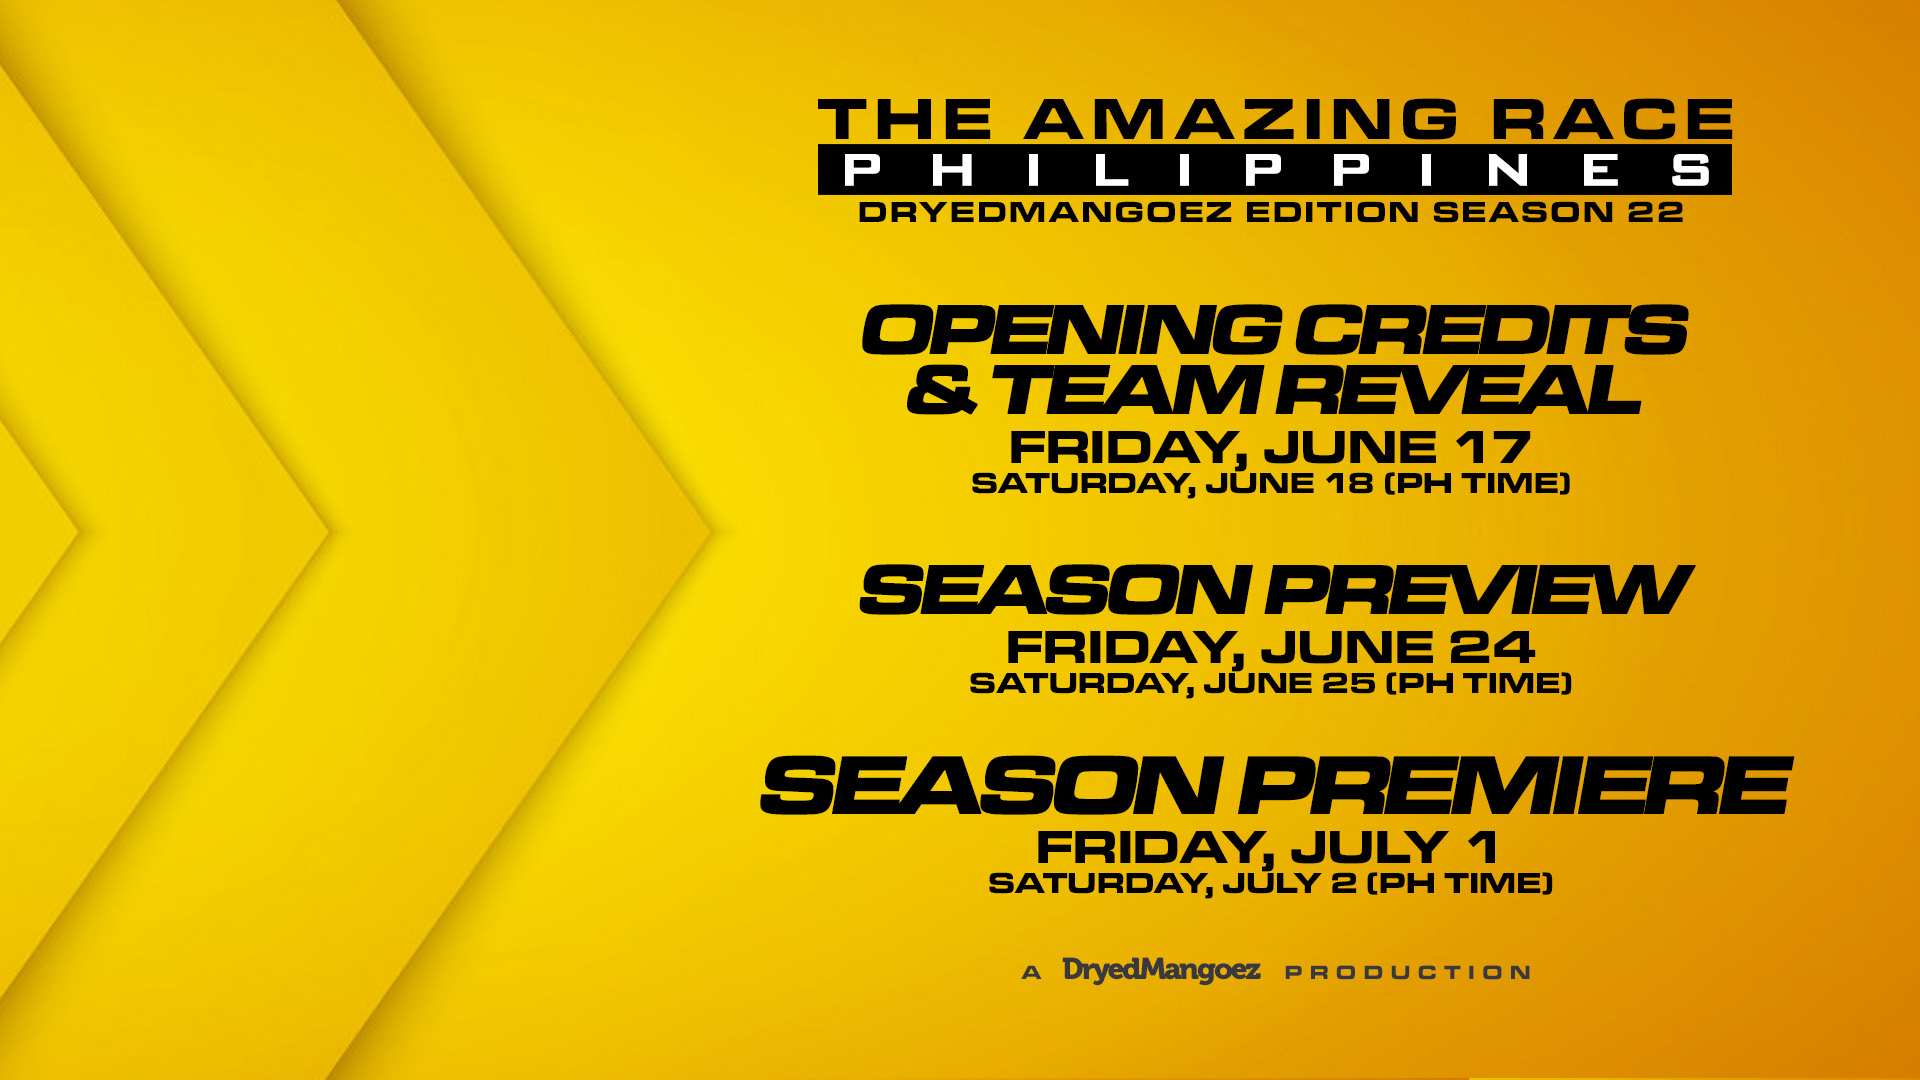 The Amazing Race Philippines: DryedMangoez Edition Season 22 Premieres July 1st!